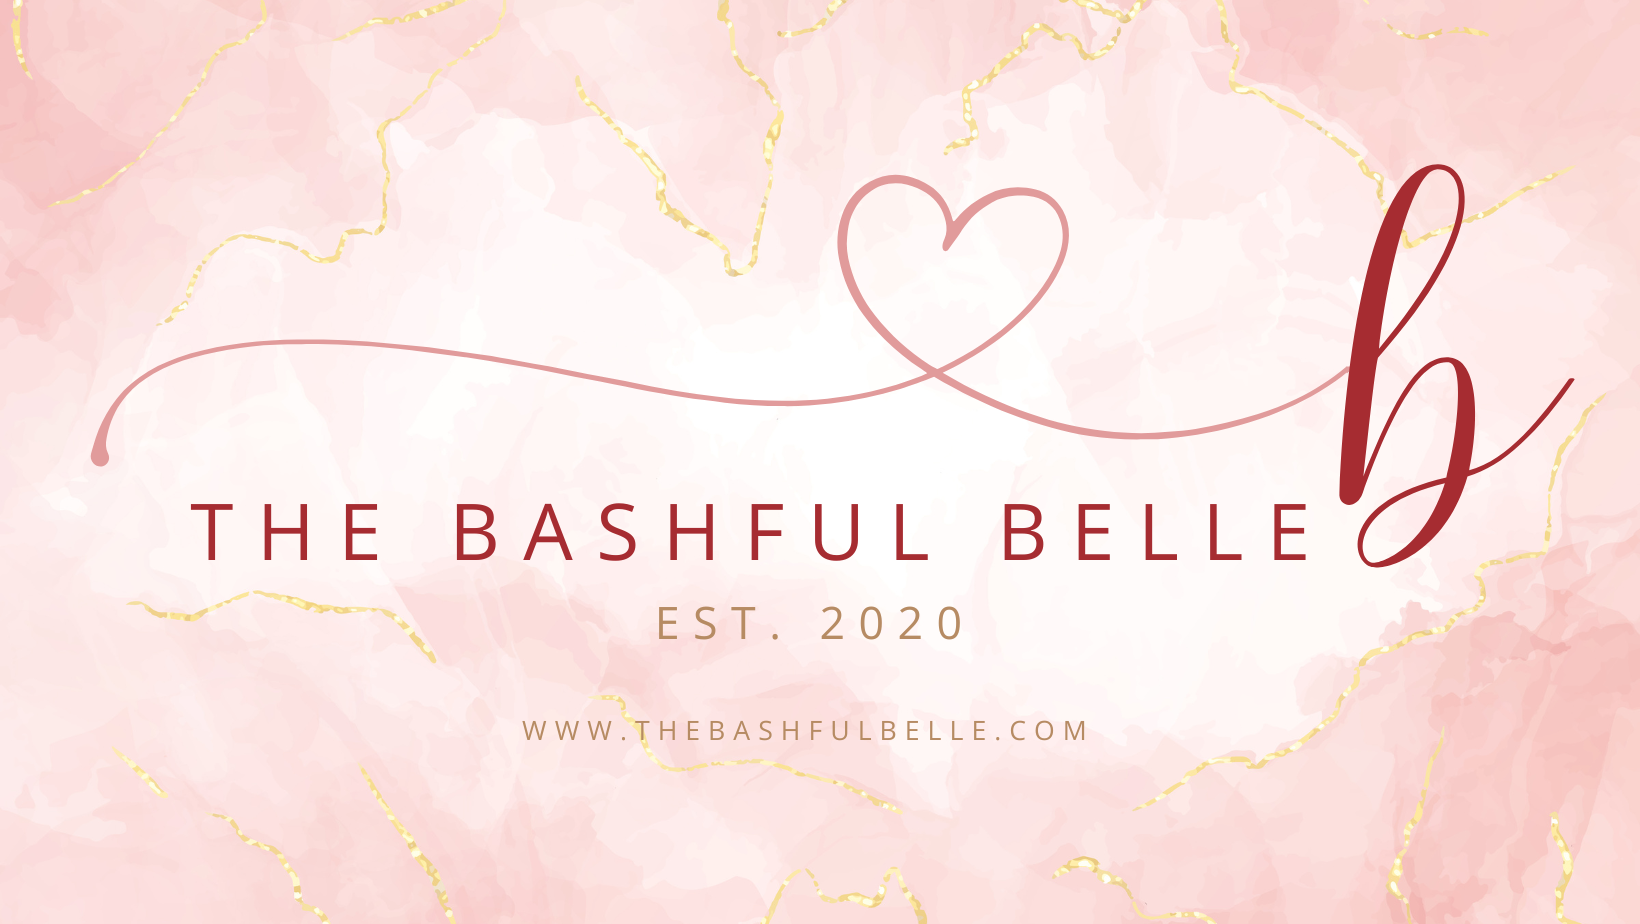 The Bashful Belle